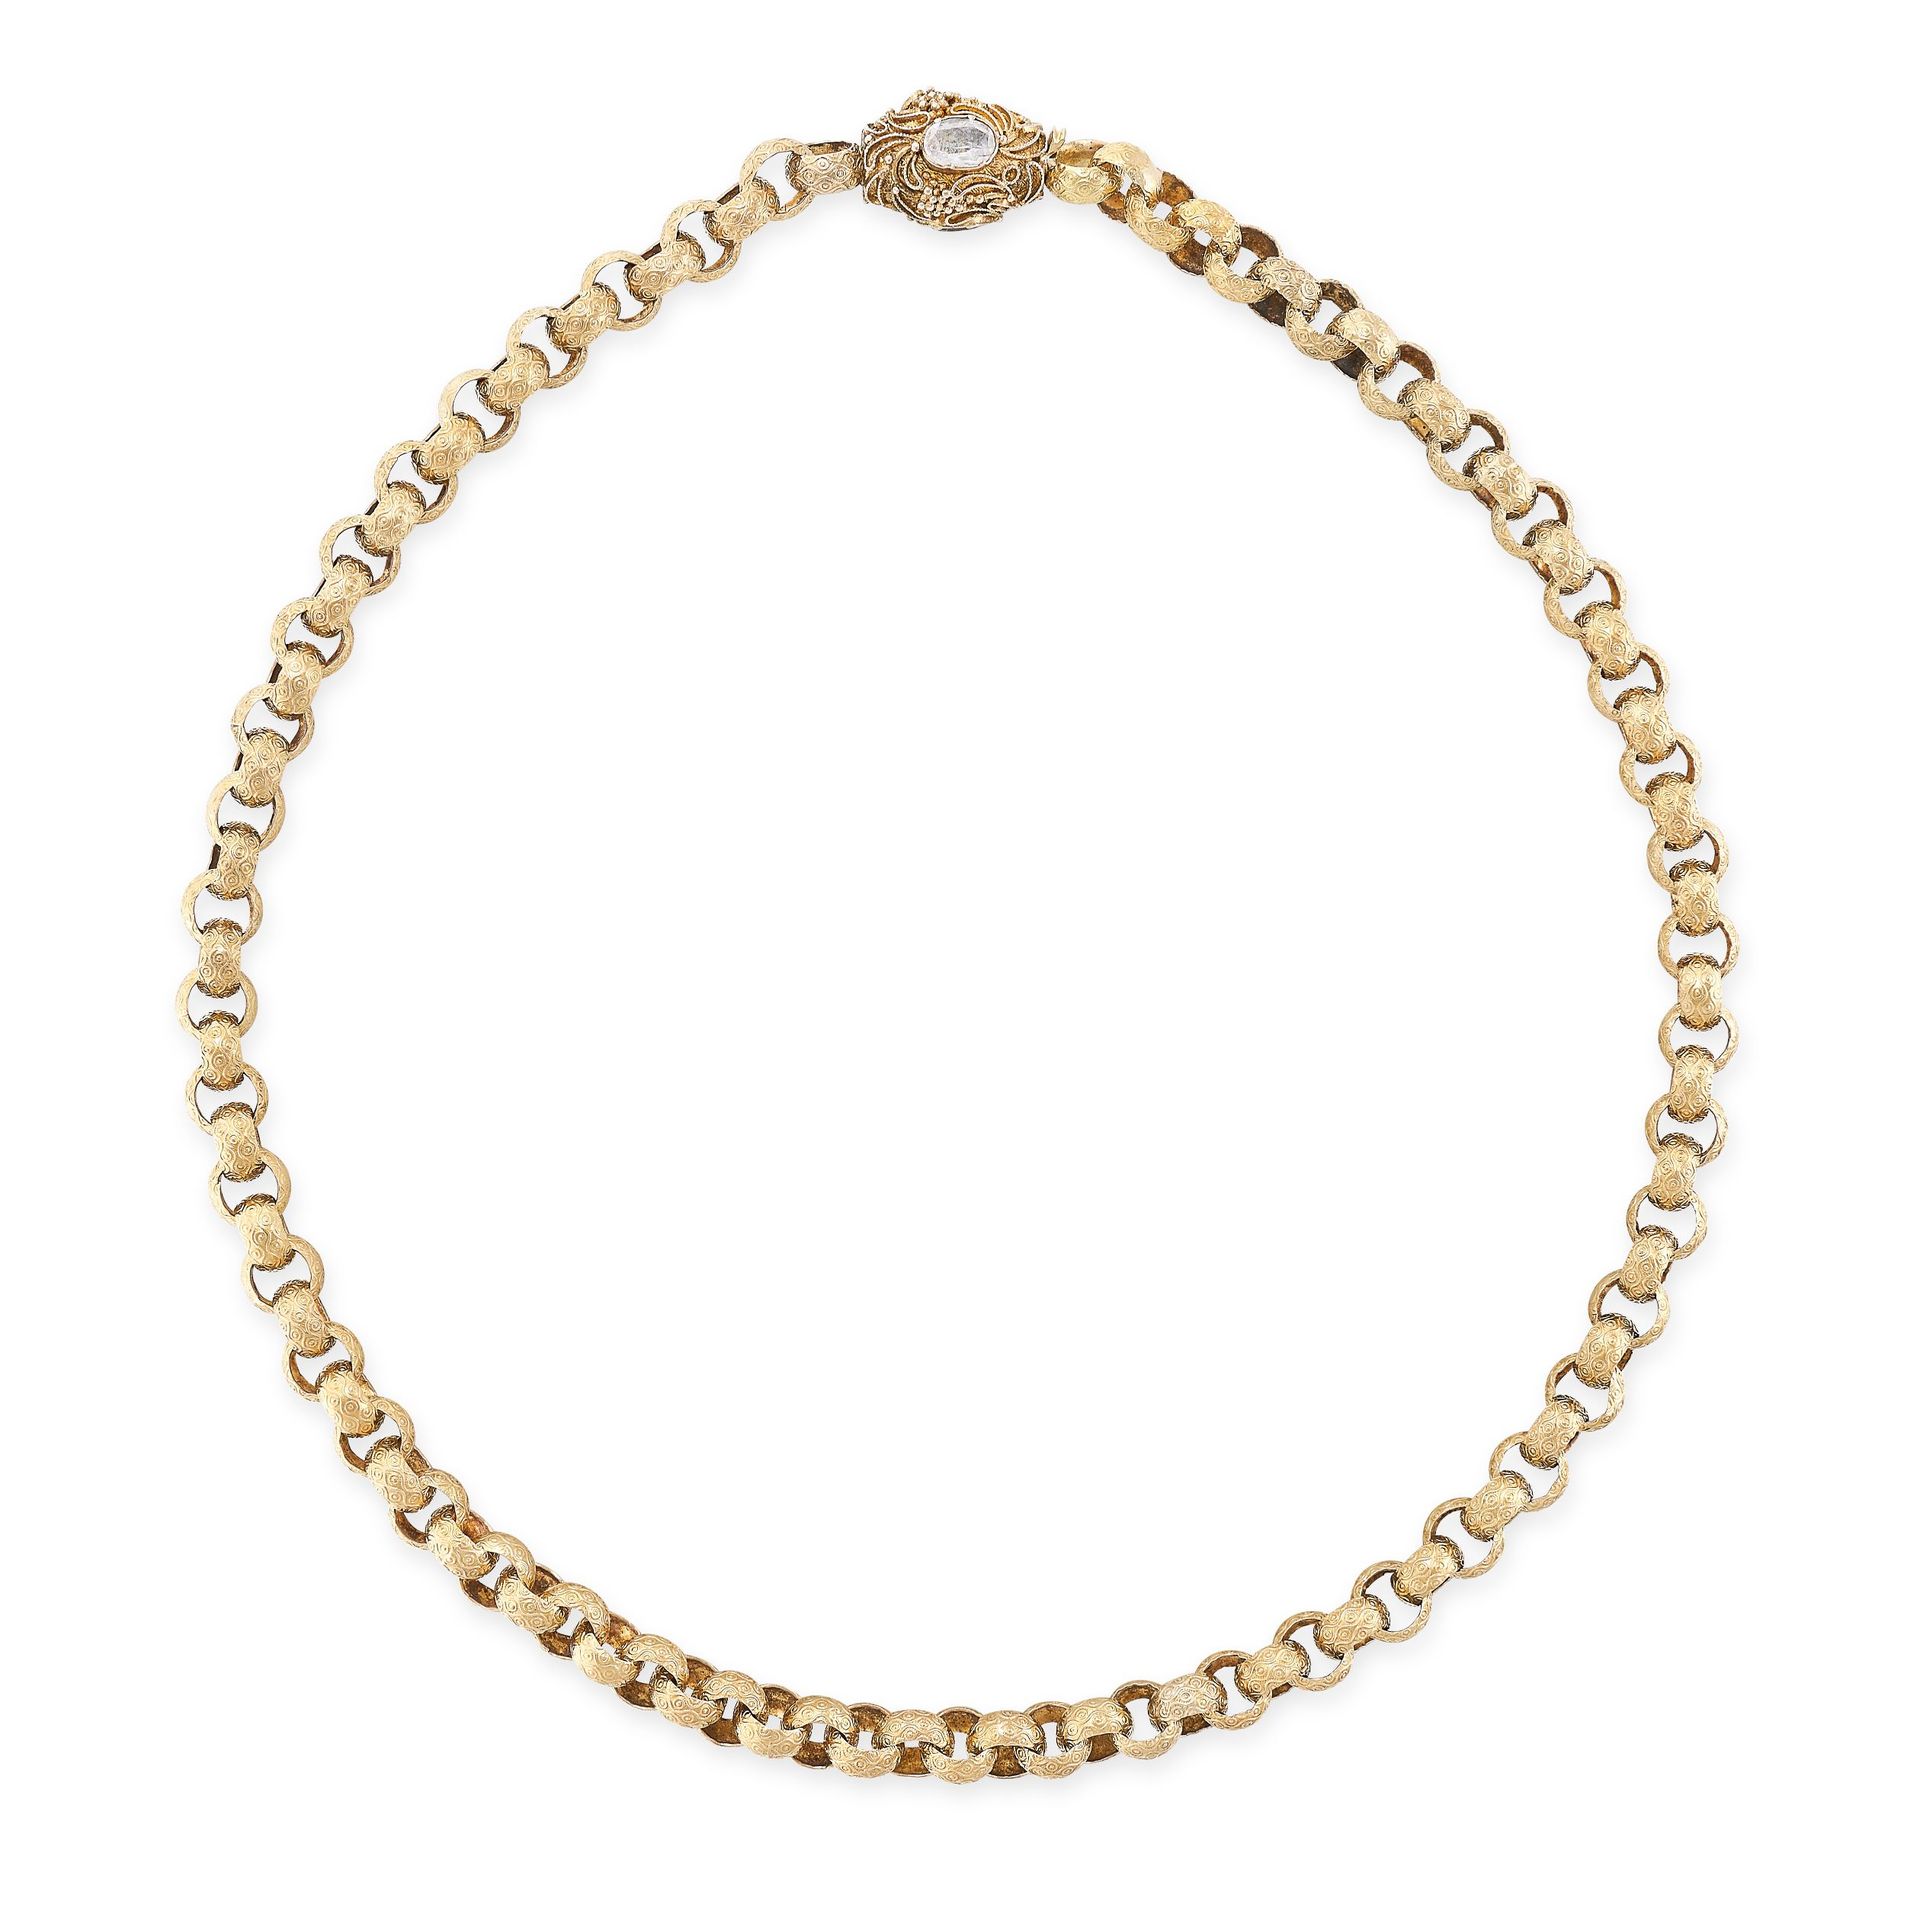 Null 格鲁吉亚黄金花链项链，由单排带纹理装饰的贝壳链组成，扣子上镶嵌着椭圆形切割的粉色黄宝石，长36.5厘米，重17.6克。